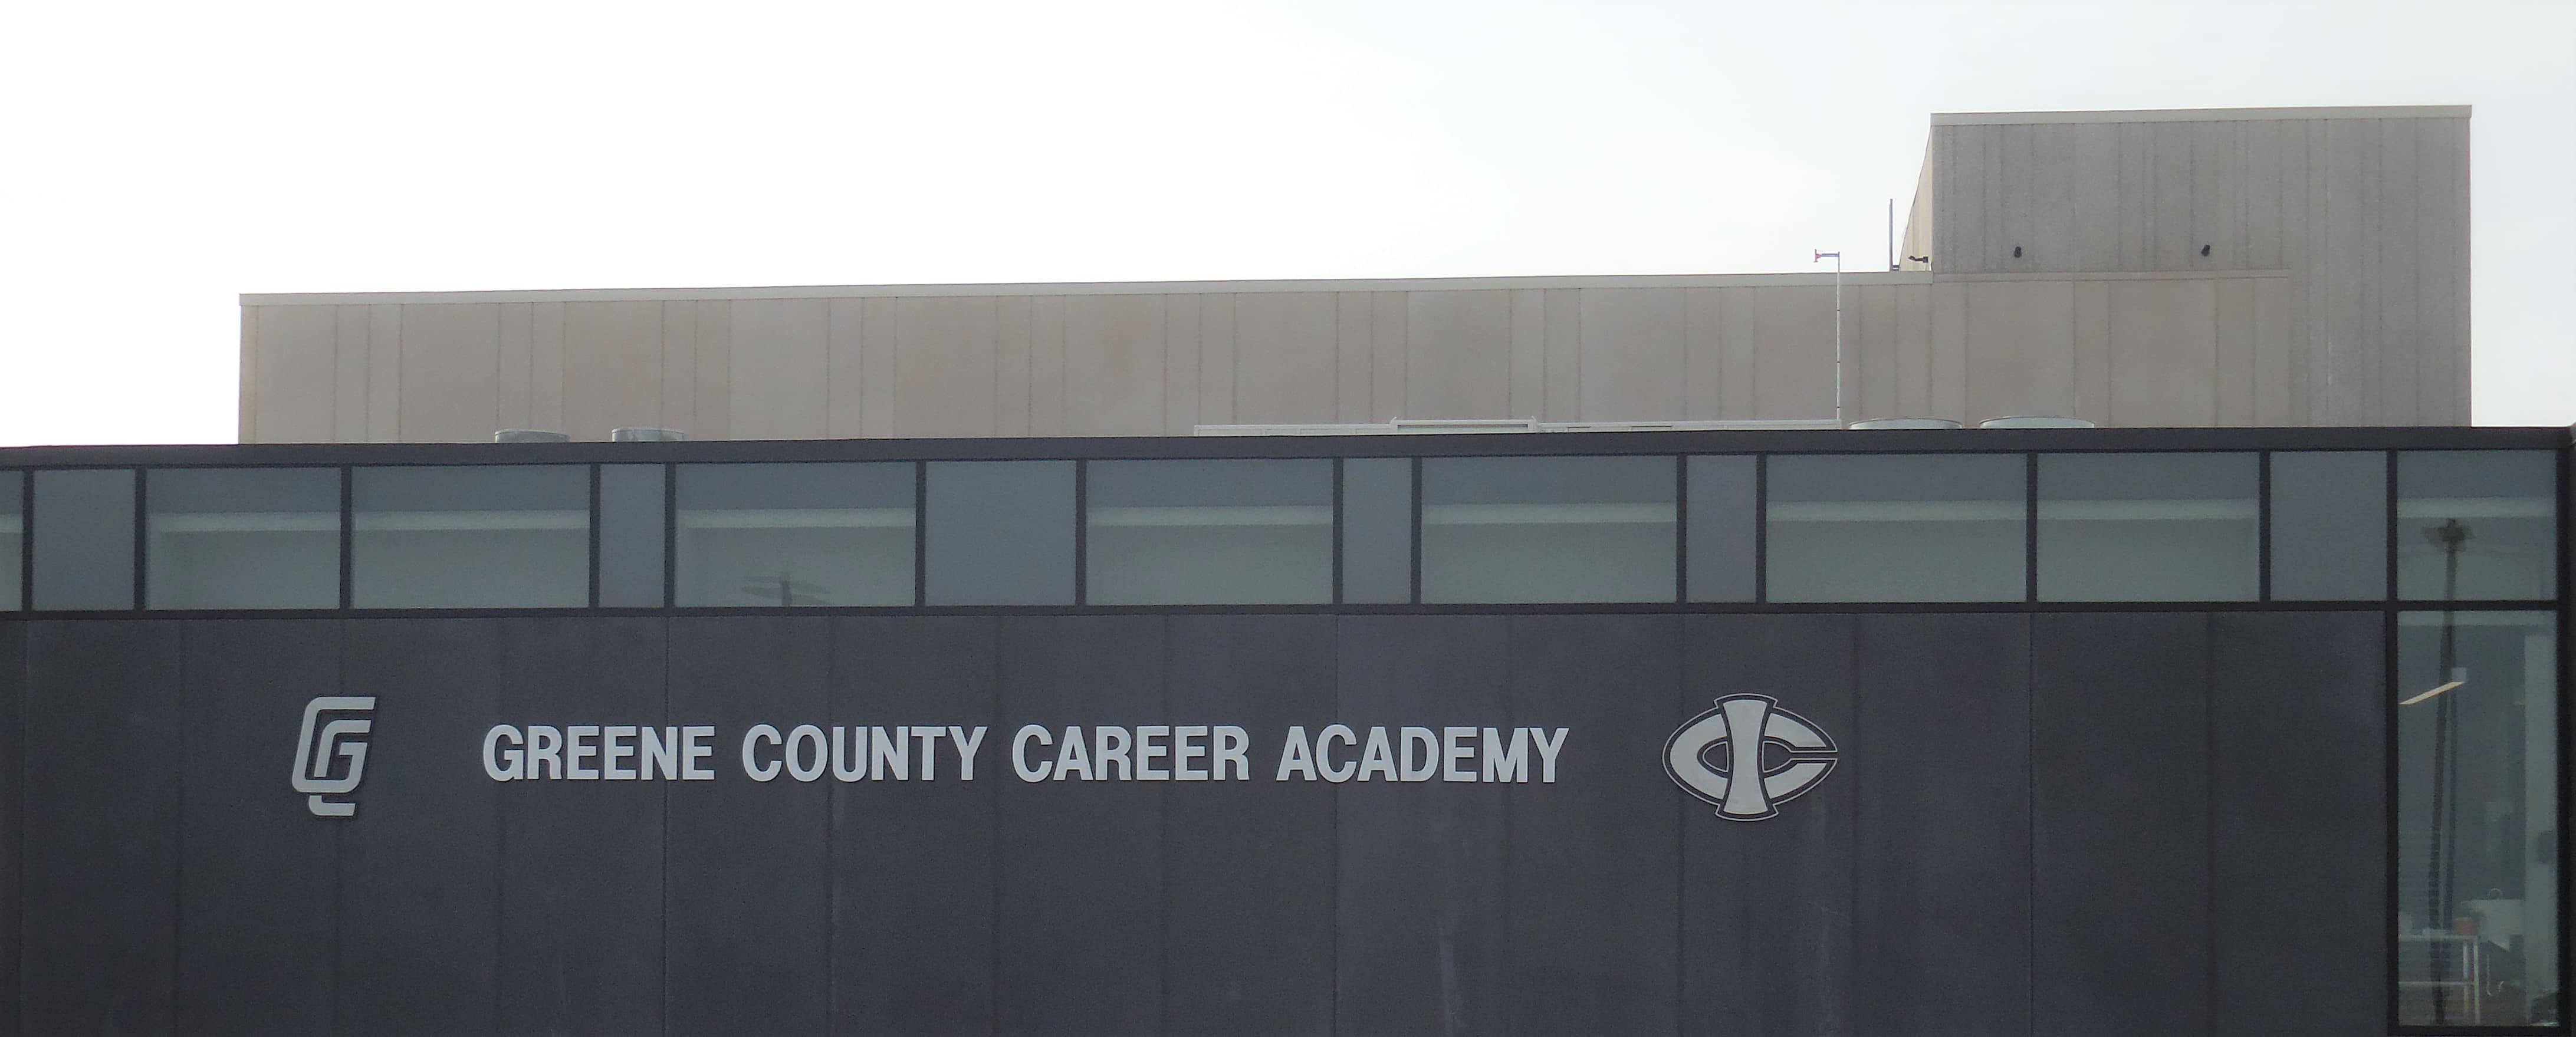 greene-county-career-academy-2